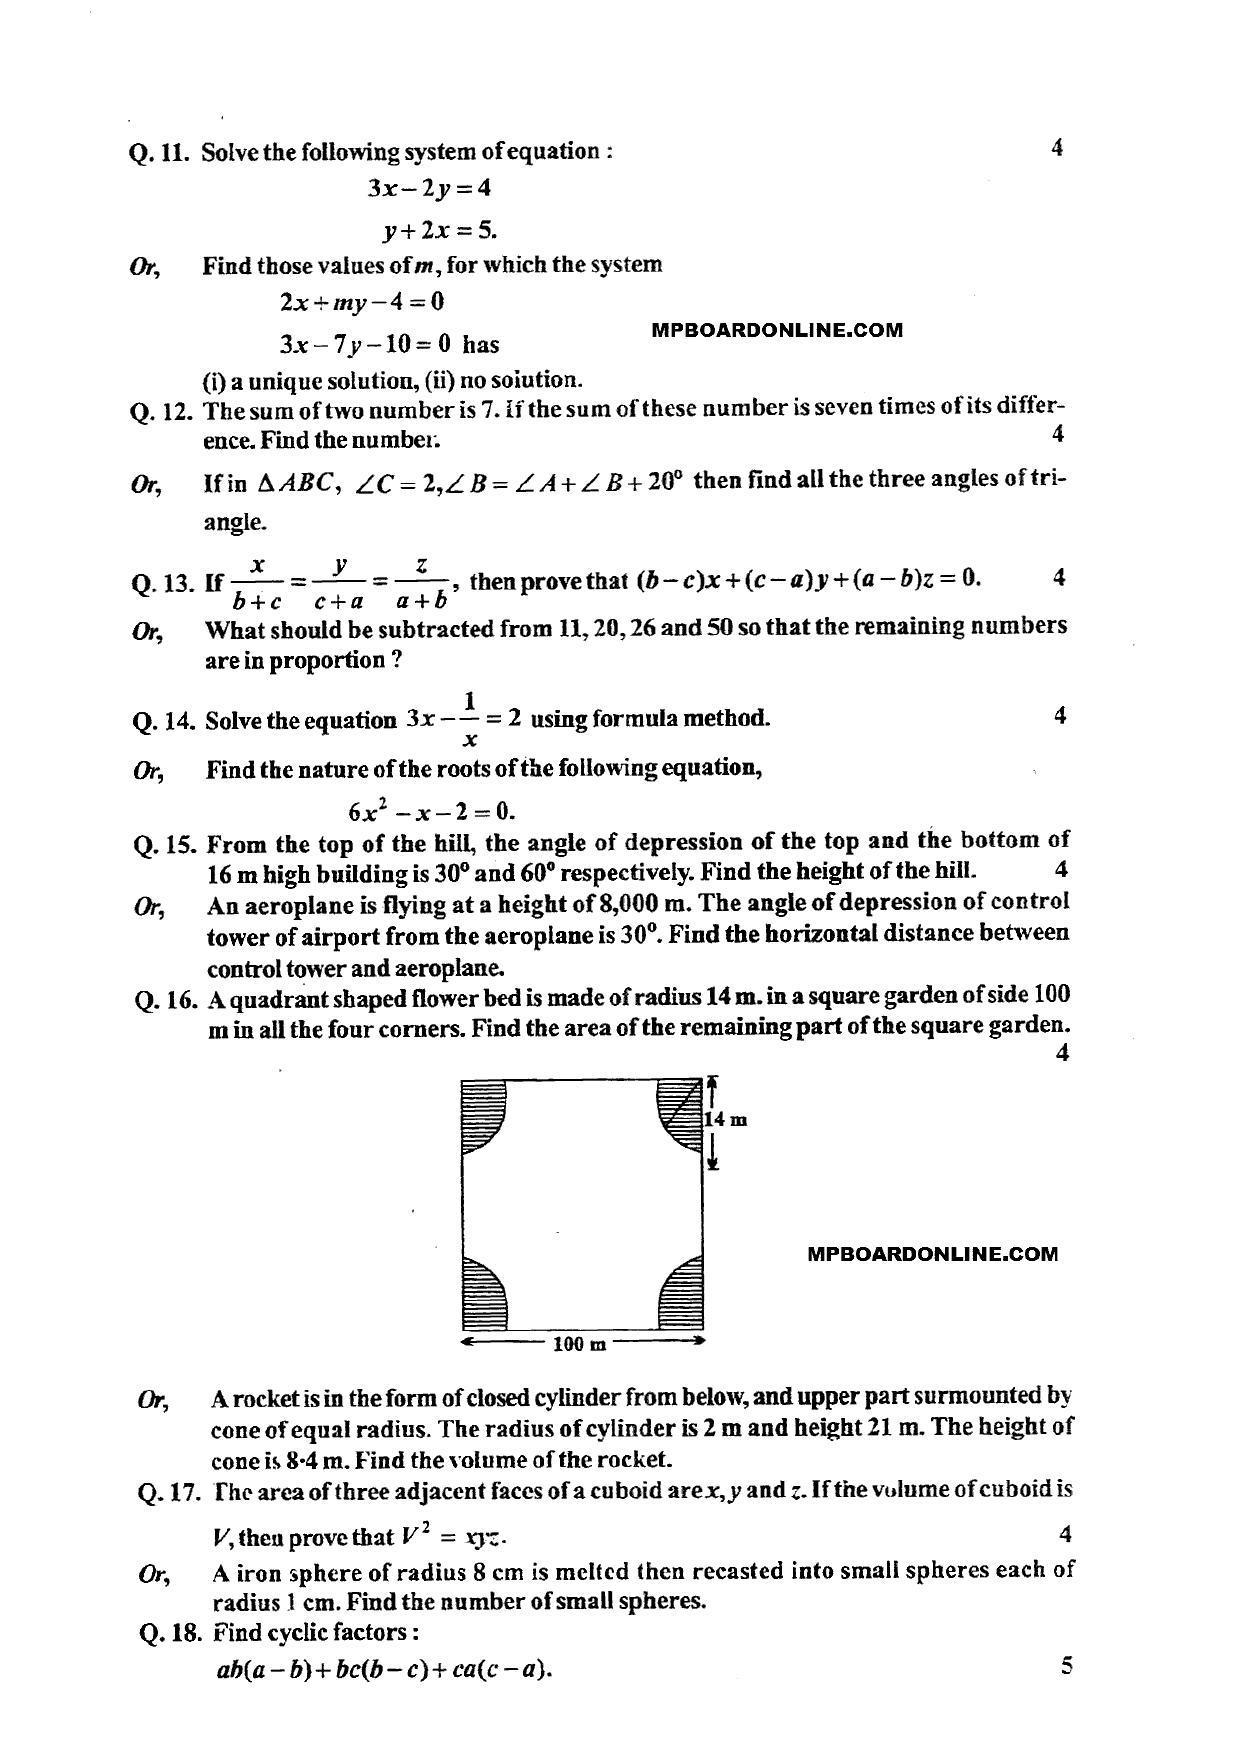 MP Board Class 10 Mathematica 2016 Question Paper - Page 3